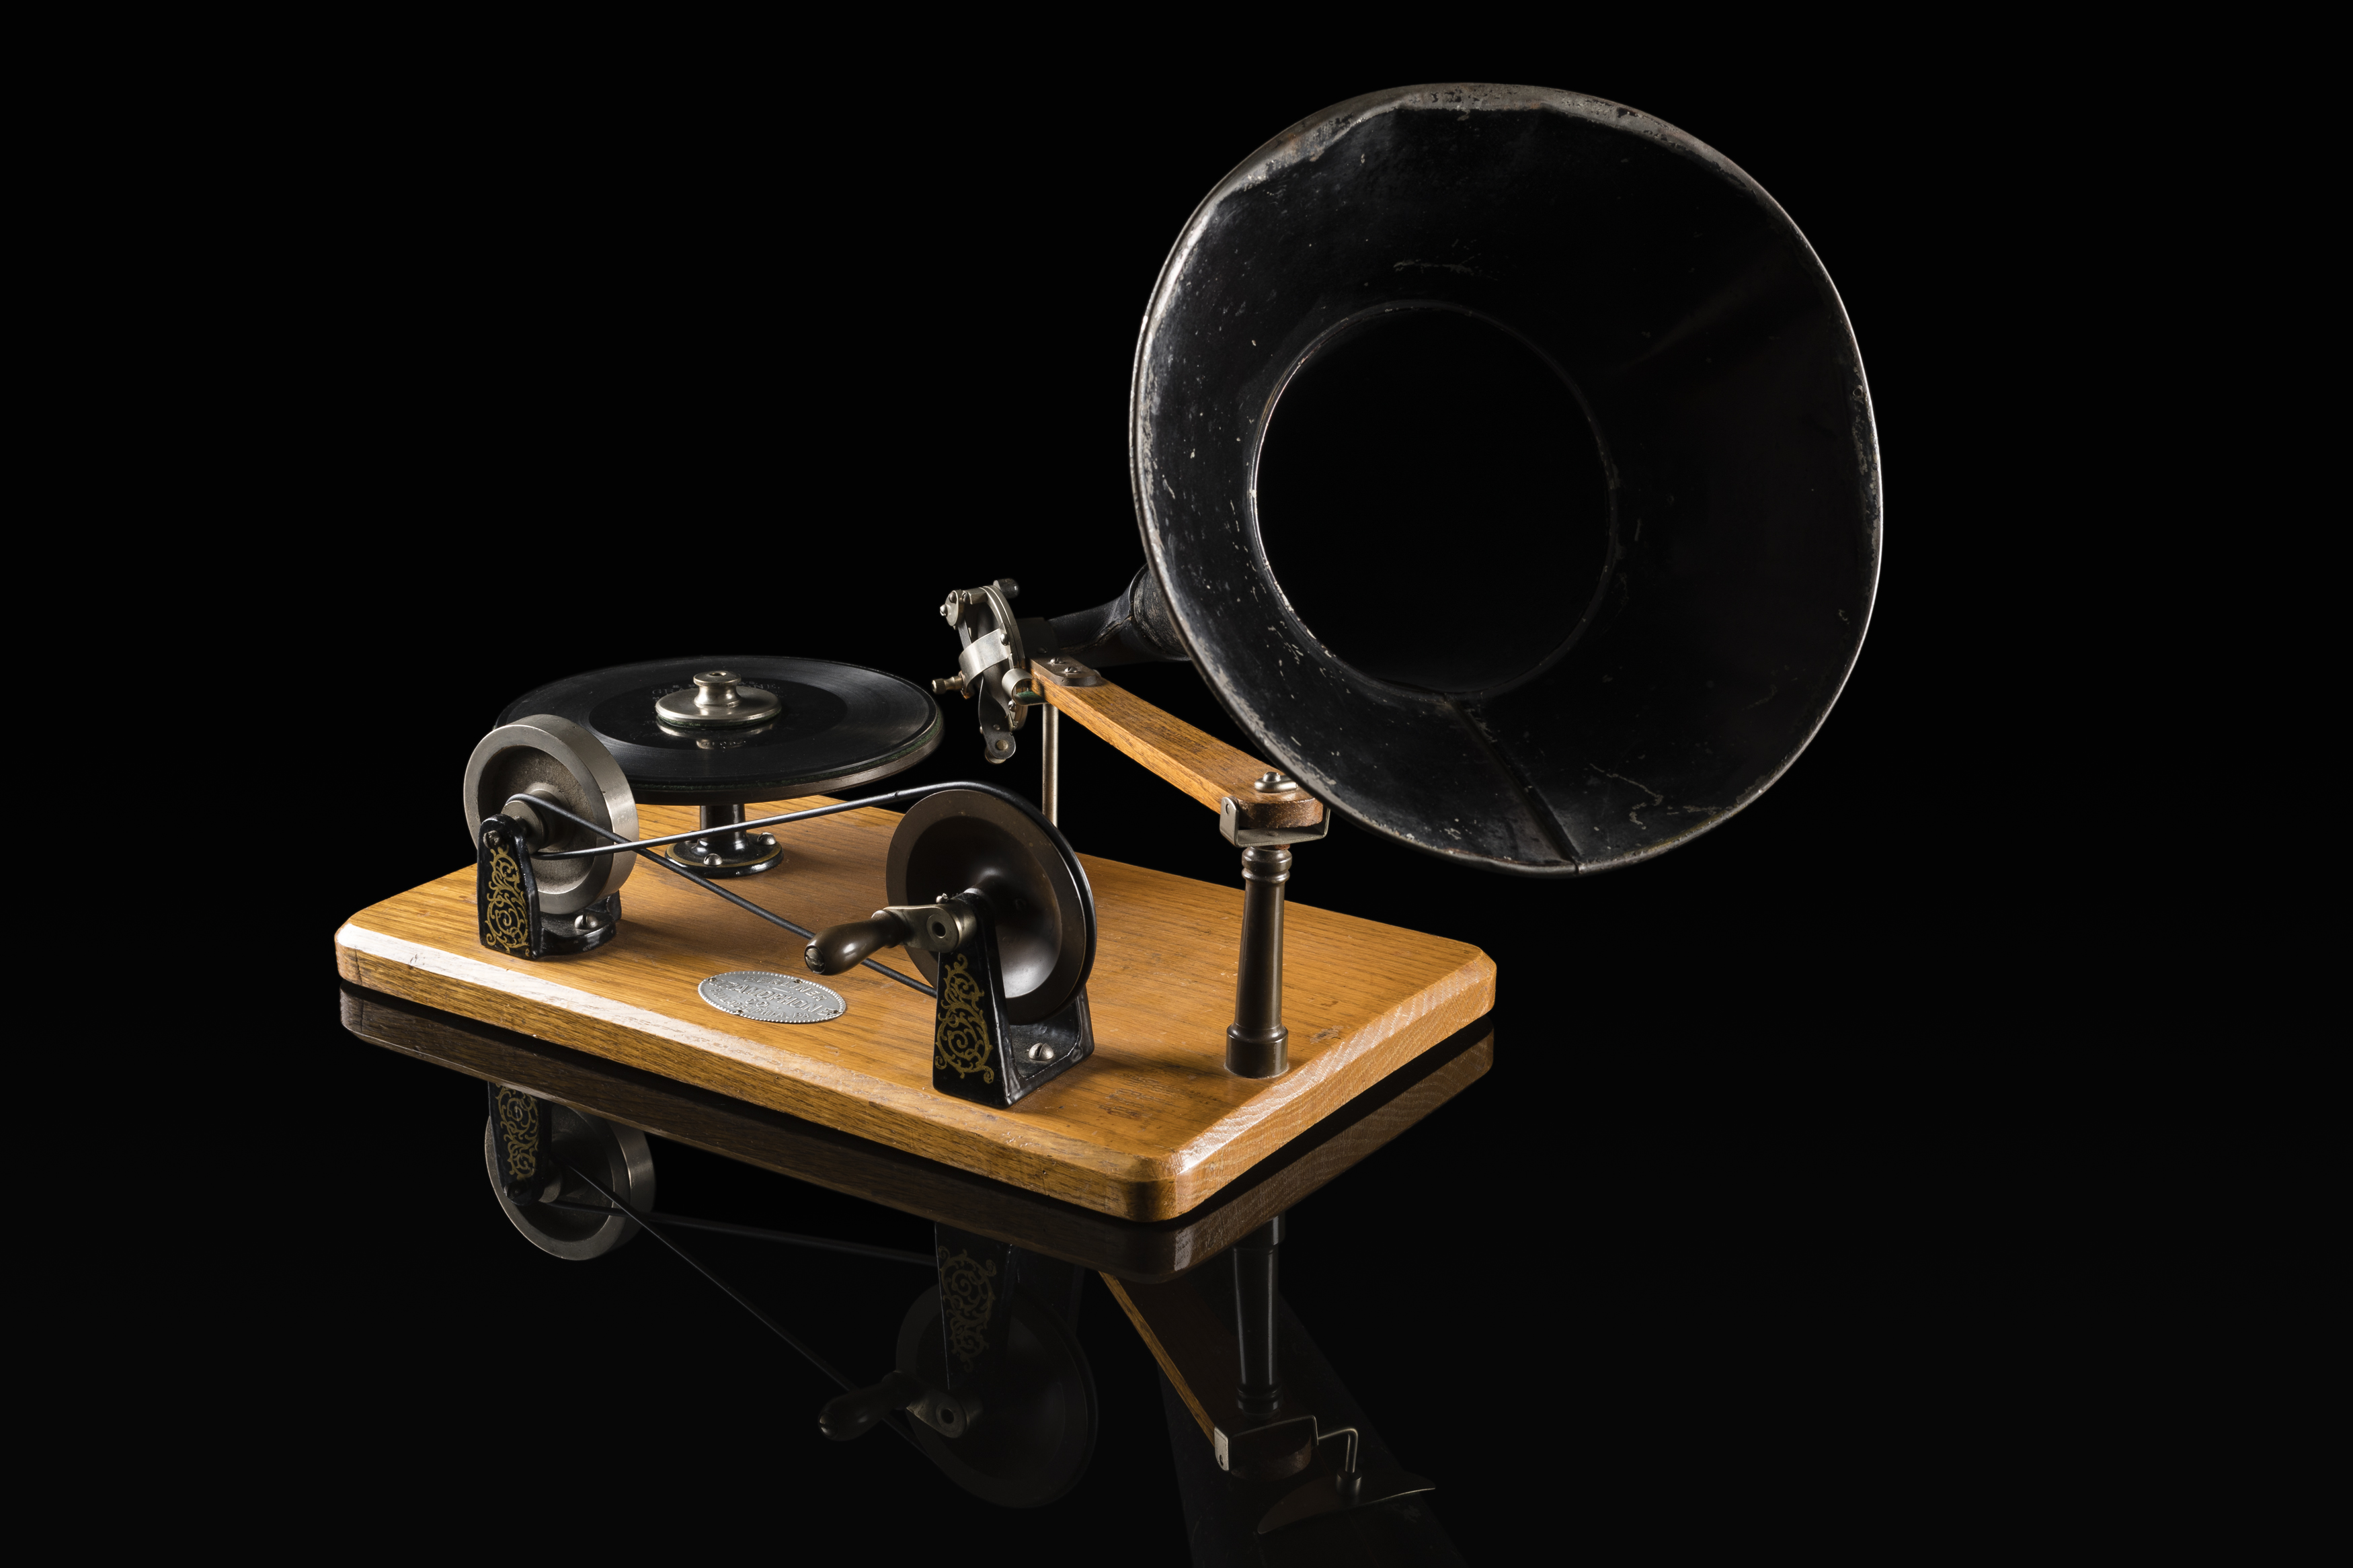 94/57/1-1/1 Gramophone, metal / wood / neoprene, made by Berliner Gramophone Co, USA, 1893-1896.